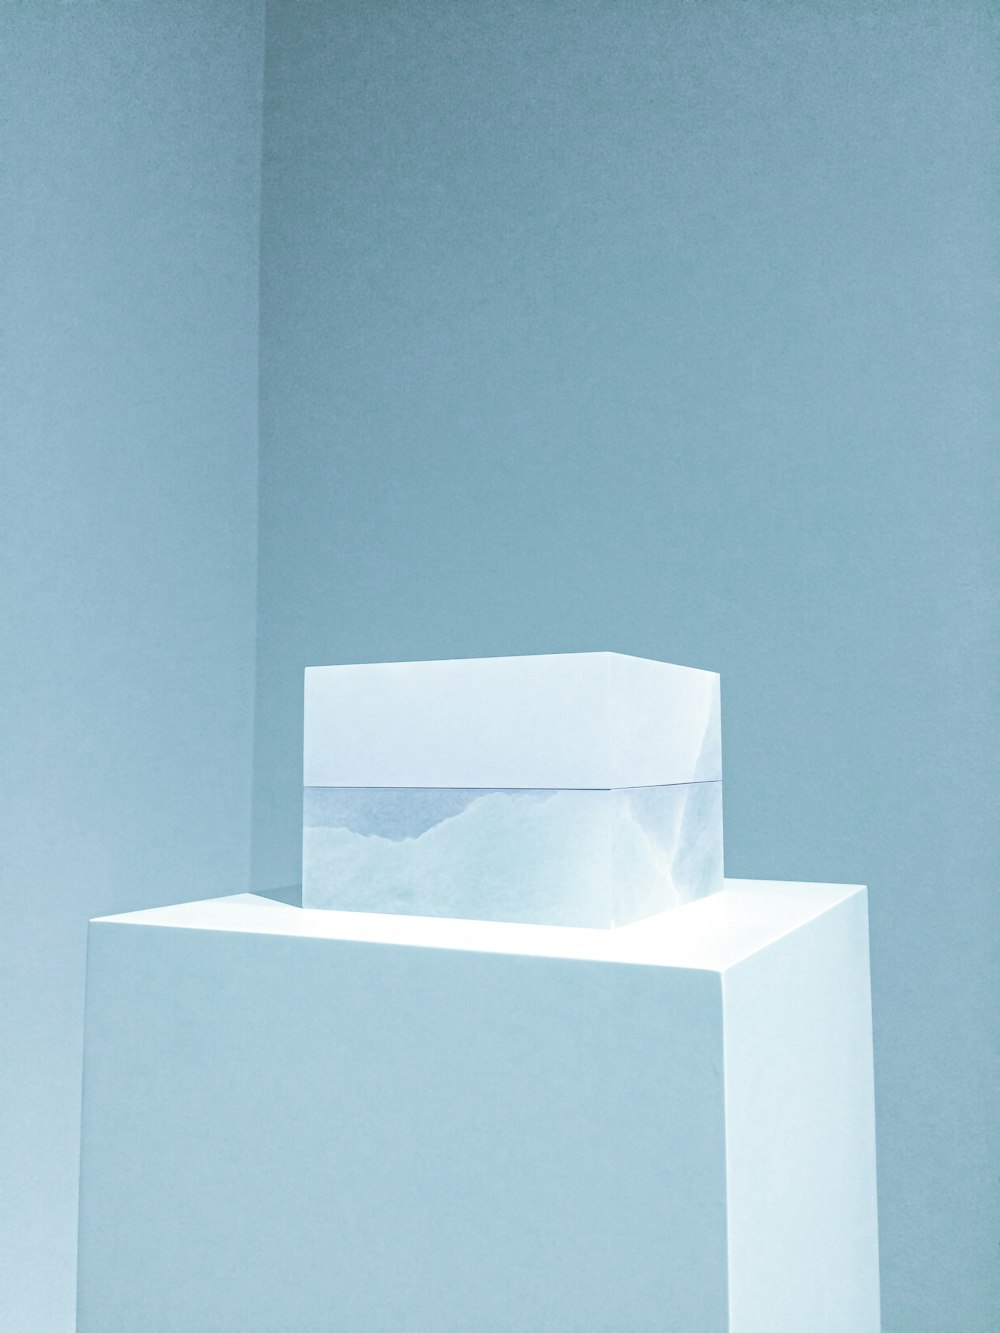 a white box sitting on top of a white pedestal